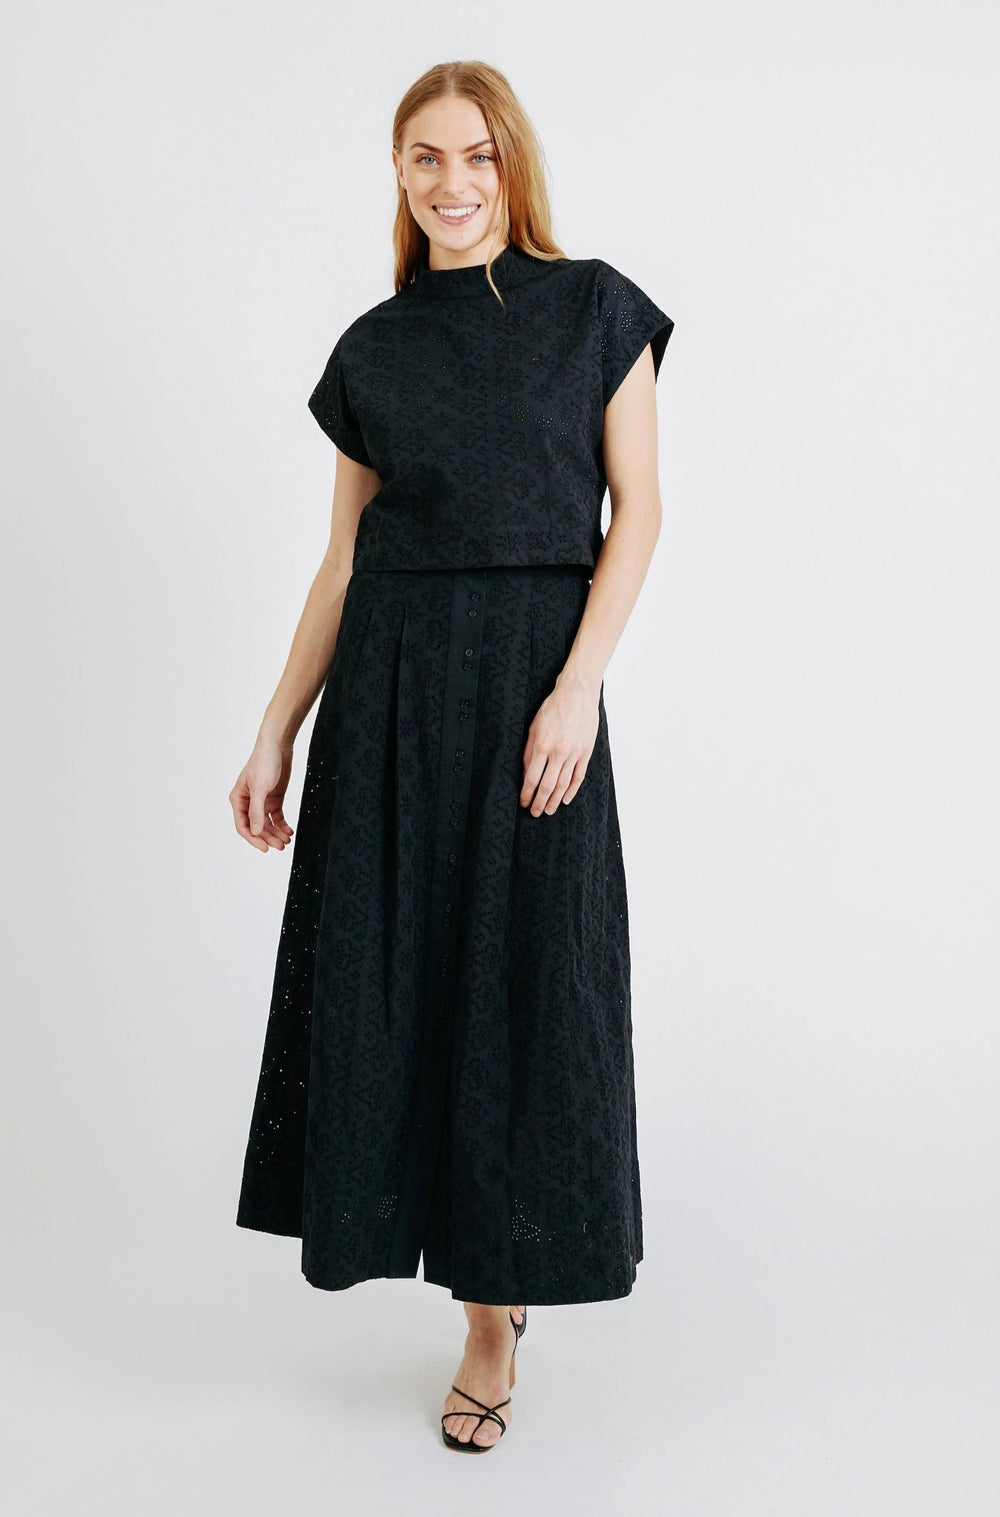 Mirth Apparel MIRTH Clothing | Lucerne Skirt in Black Eyelet